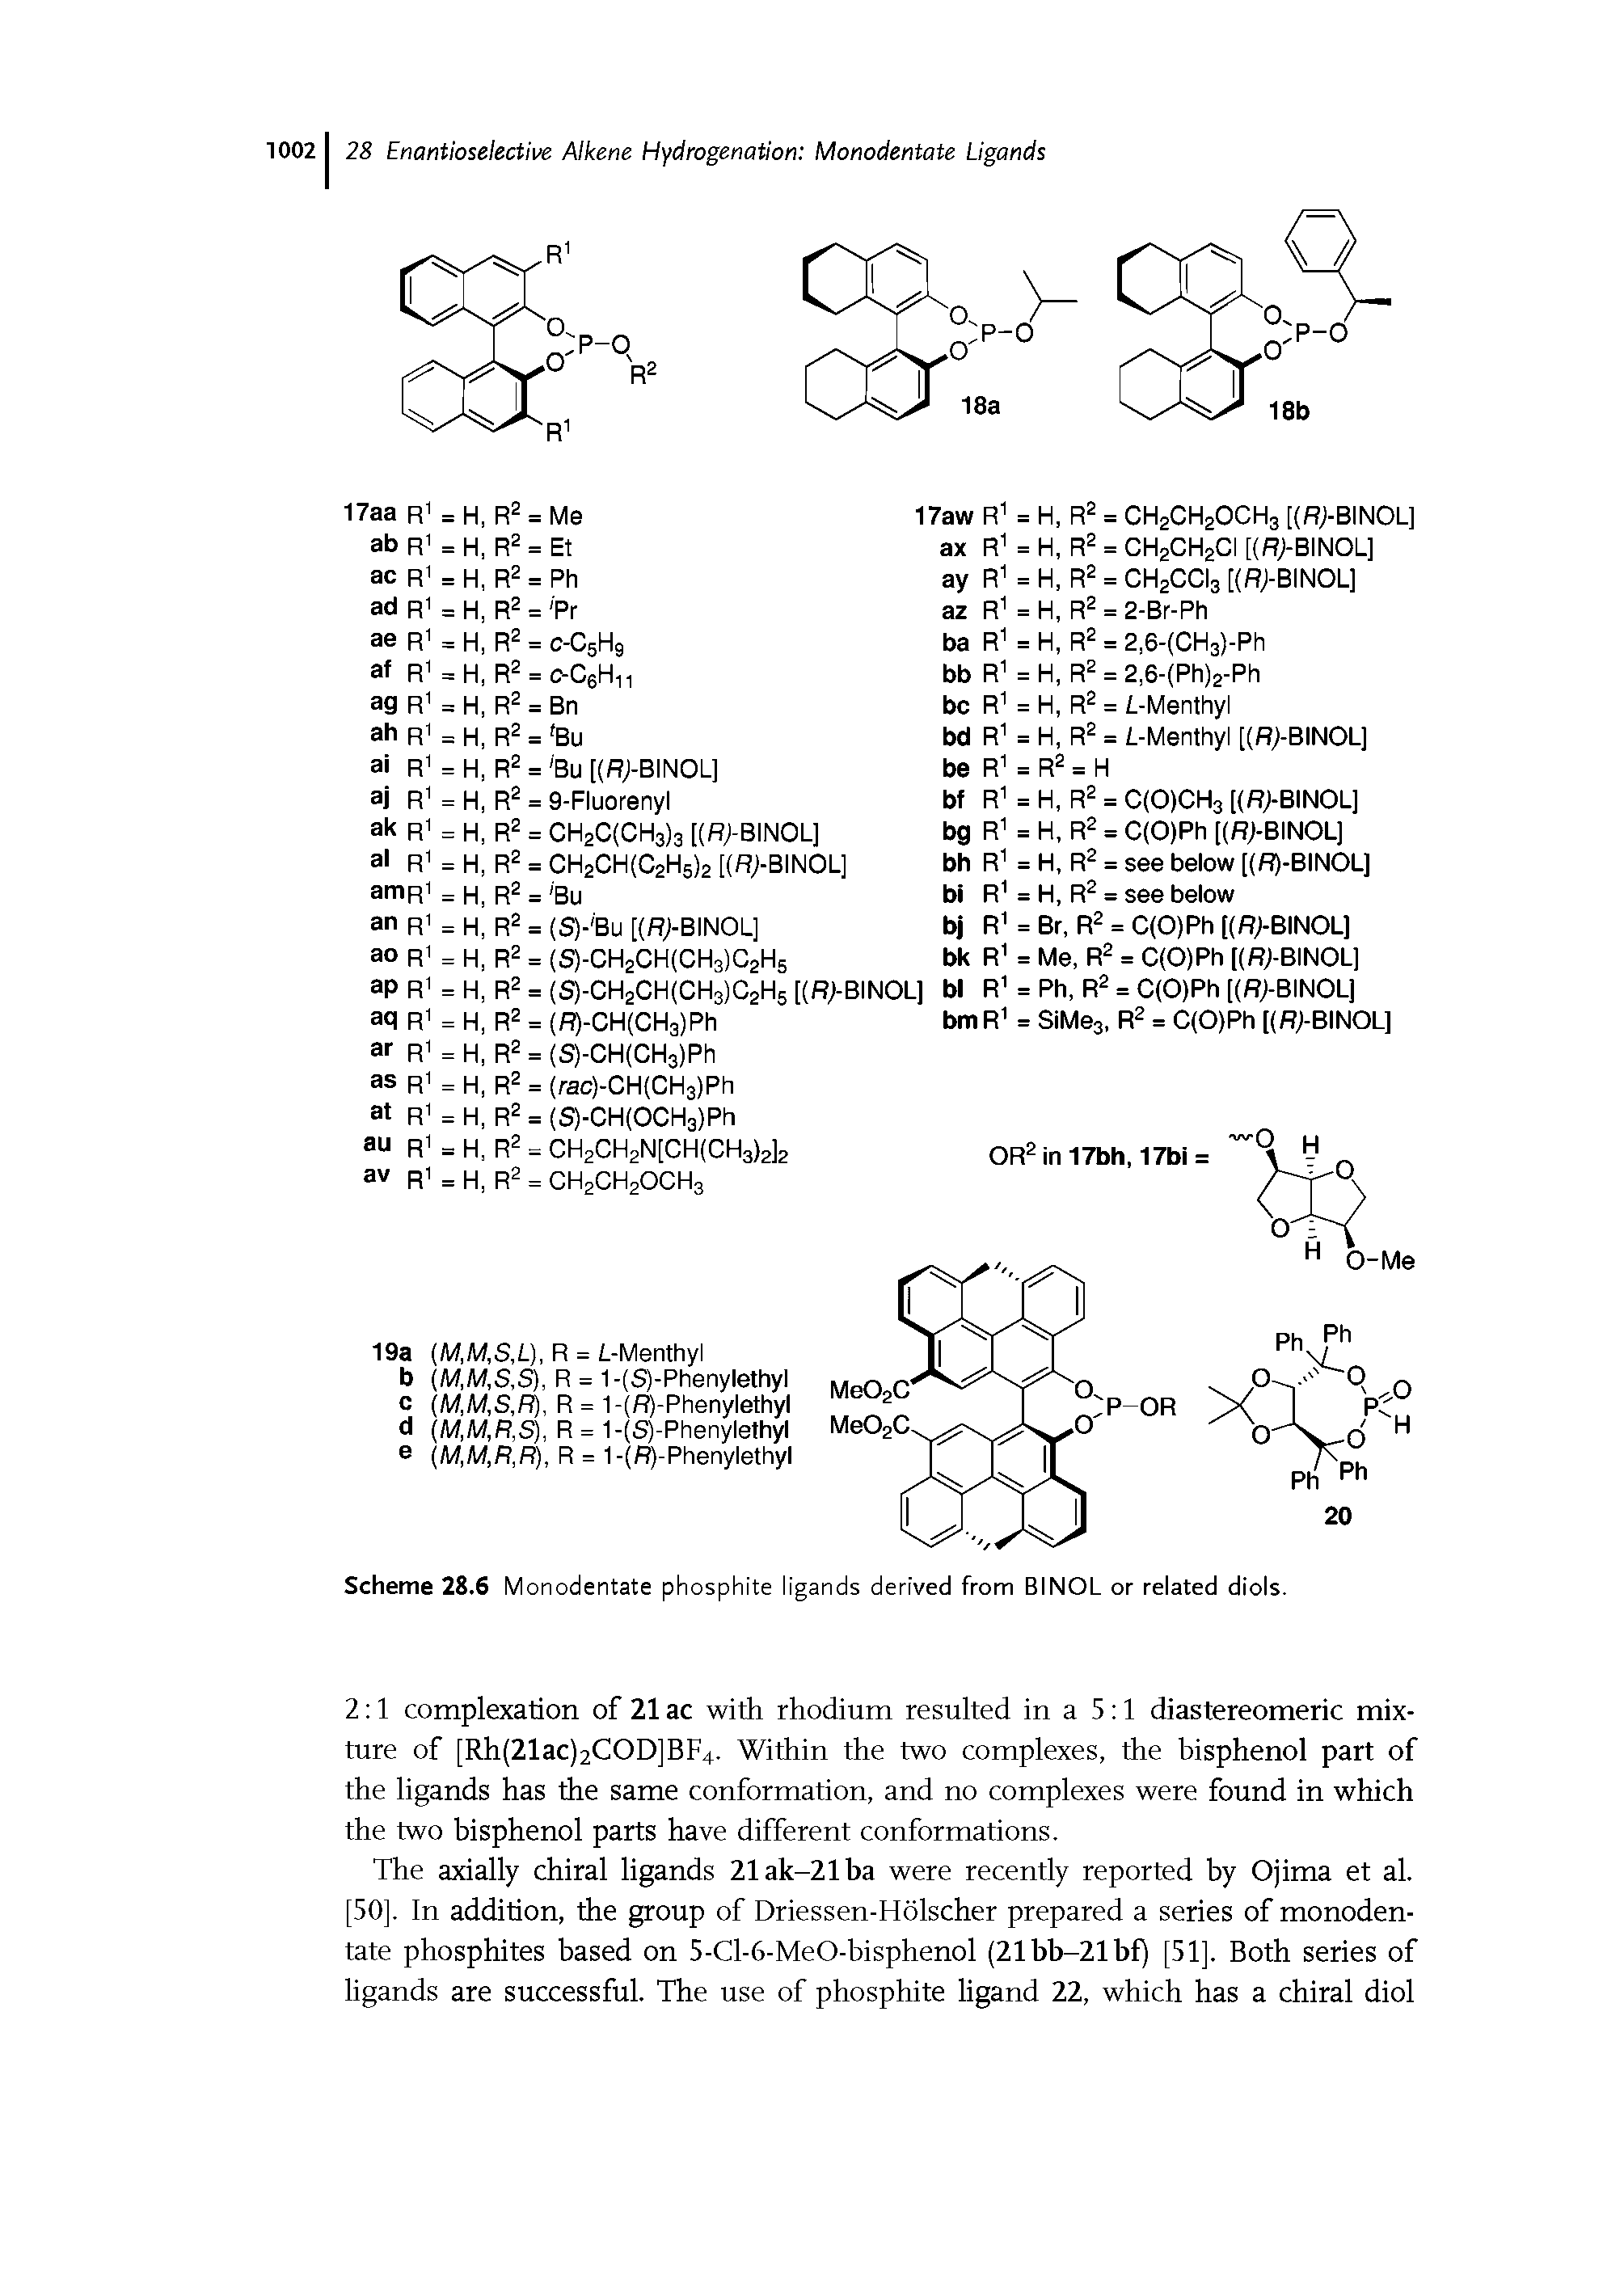 Scheme 28.6 Monodentate phosphite ligands derived from BINOL or related diols.